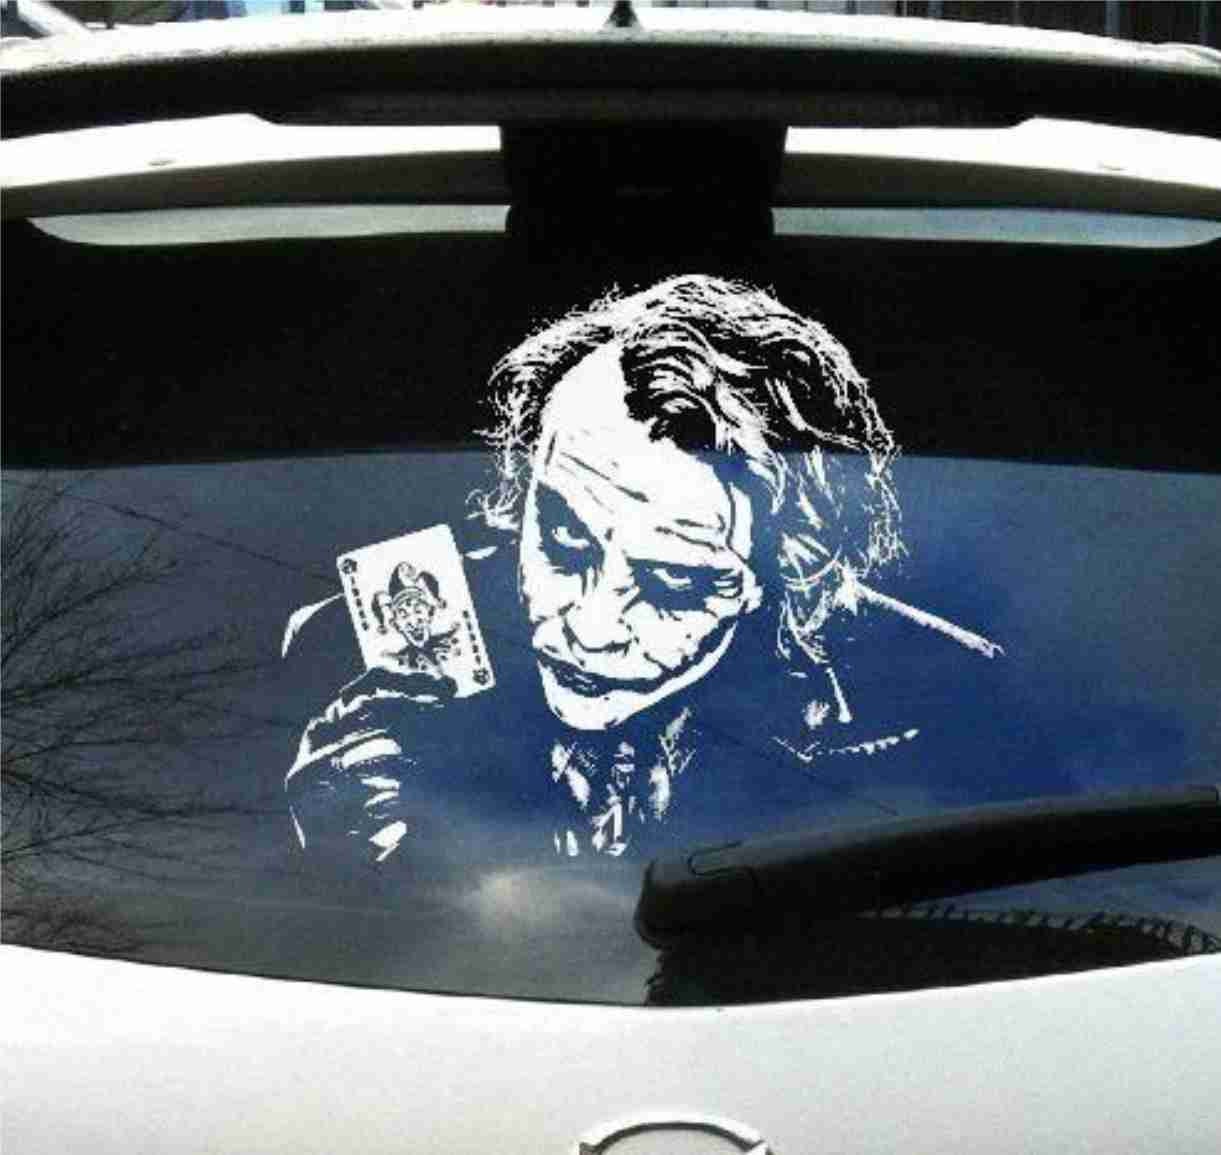 Batman Aufkleber Autoaufkleber Sticker 15cm x 10cm, Fun, Designs